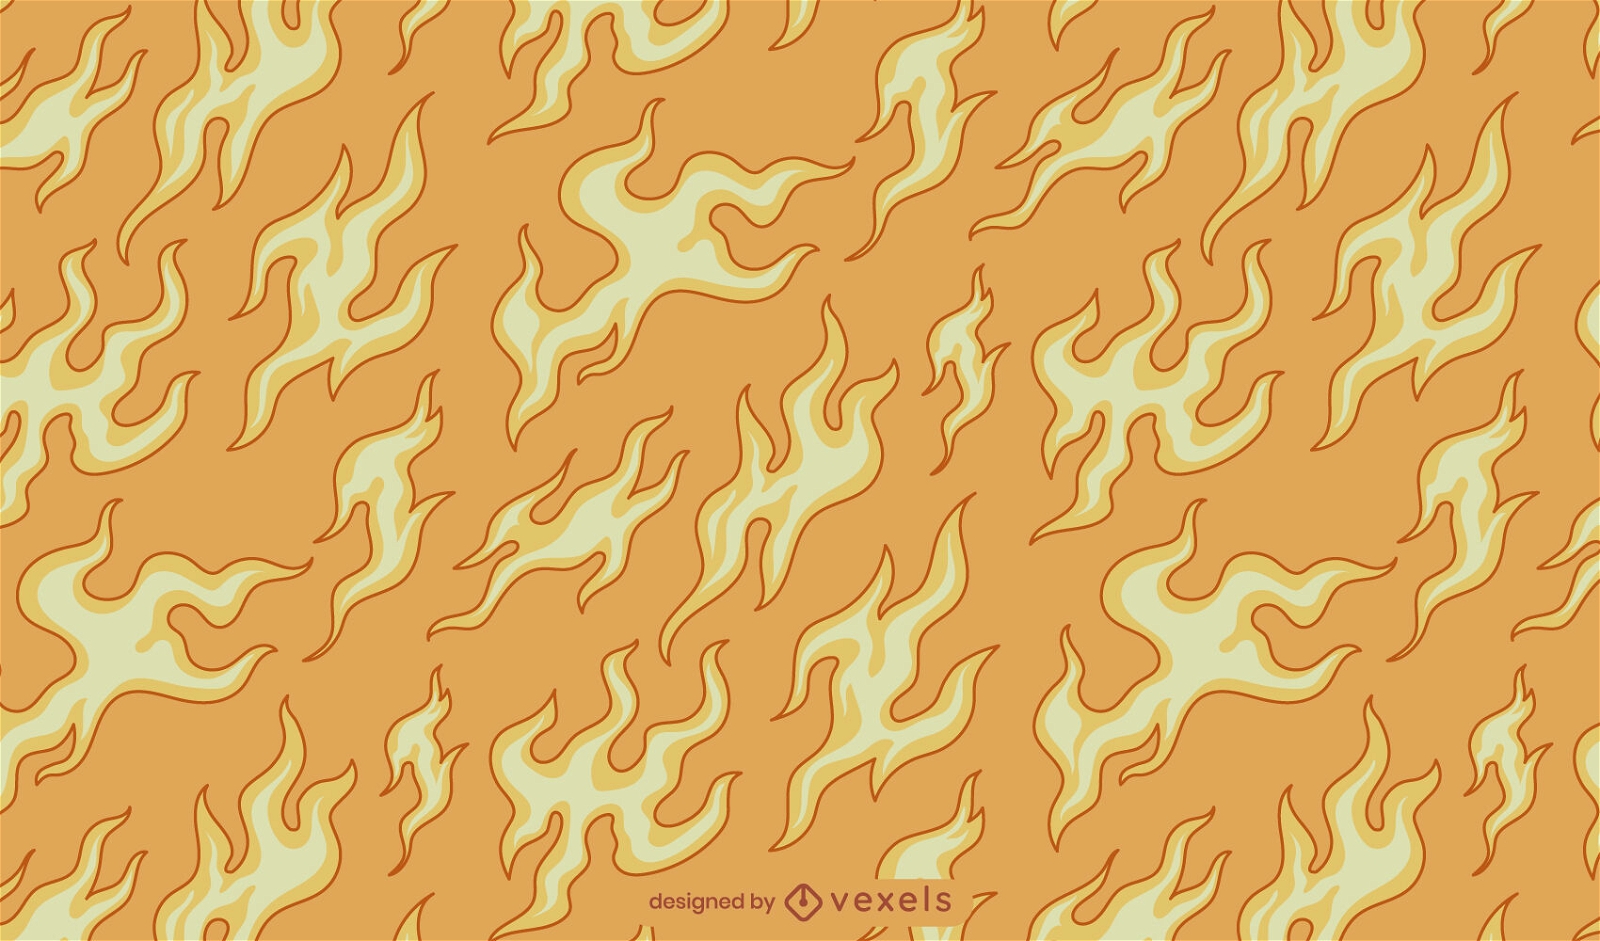 Fire flames nature pattern design